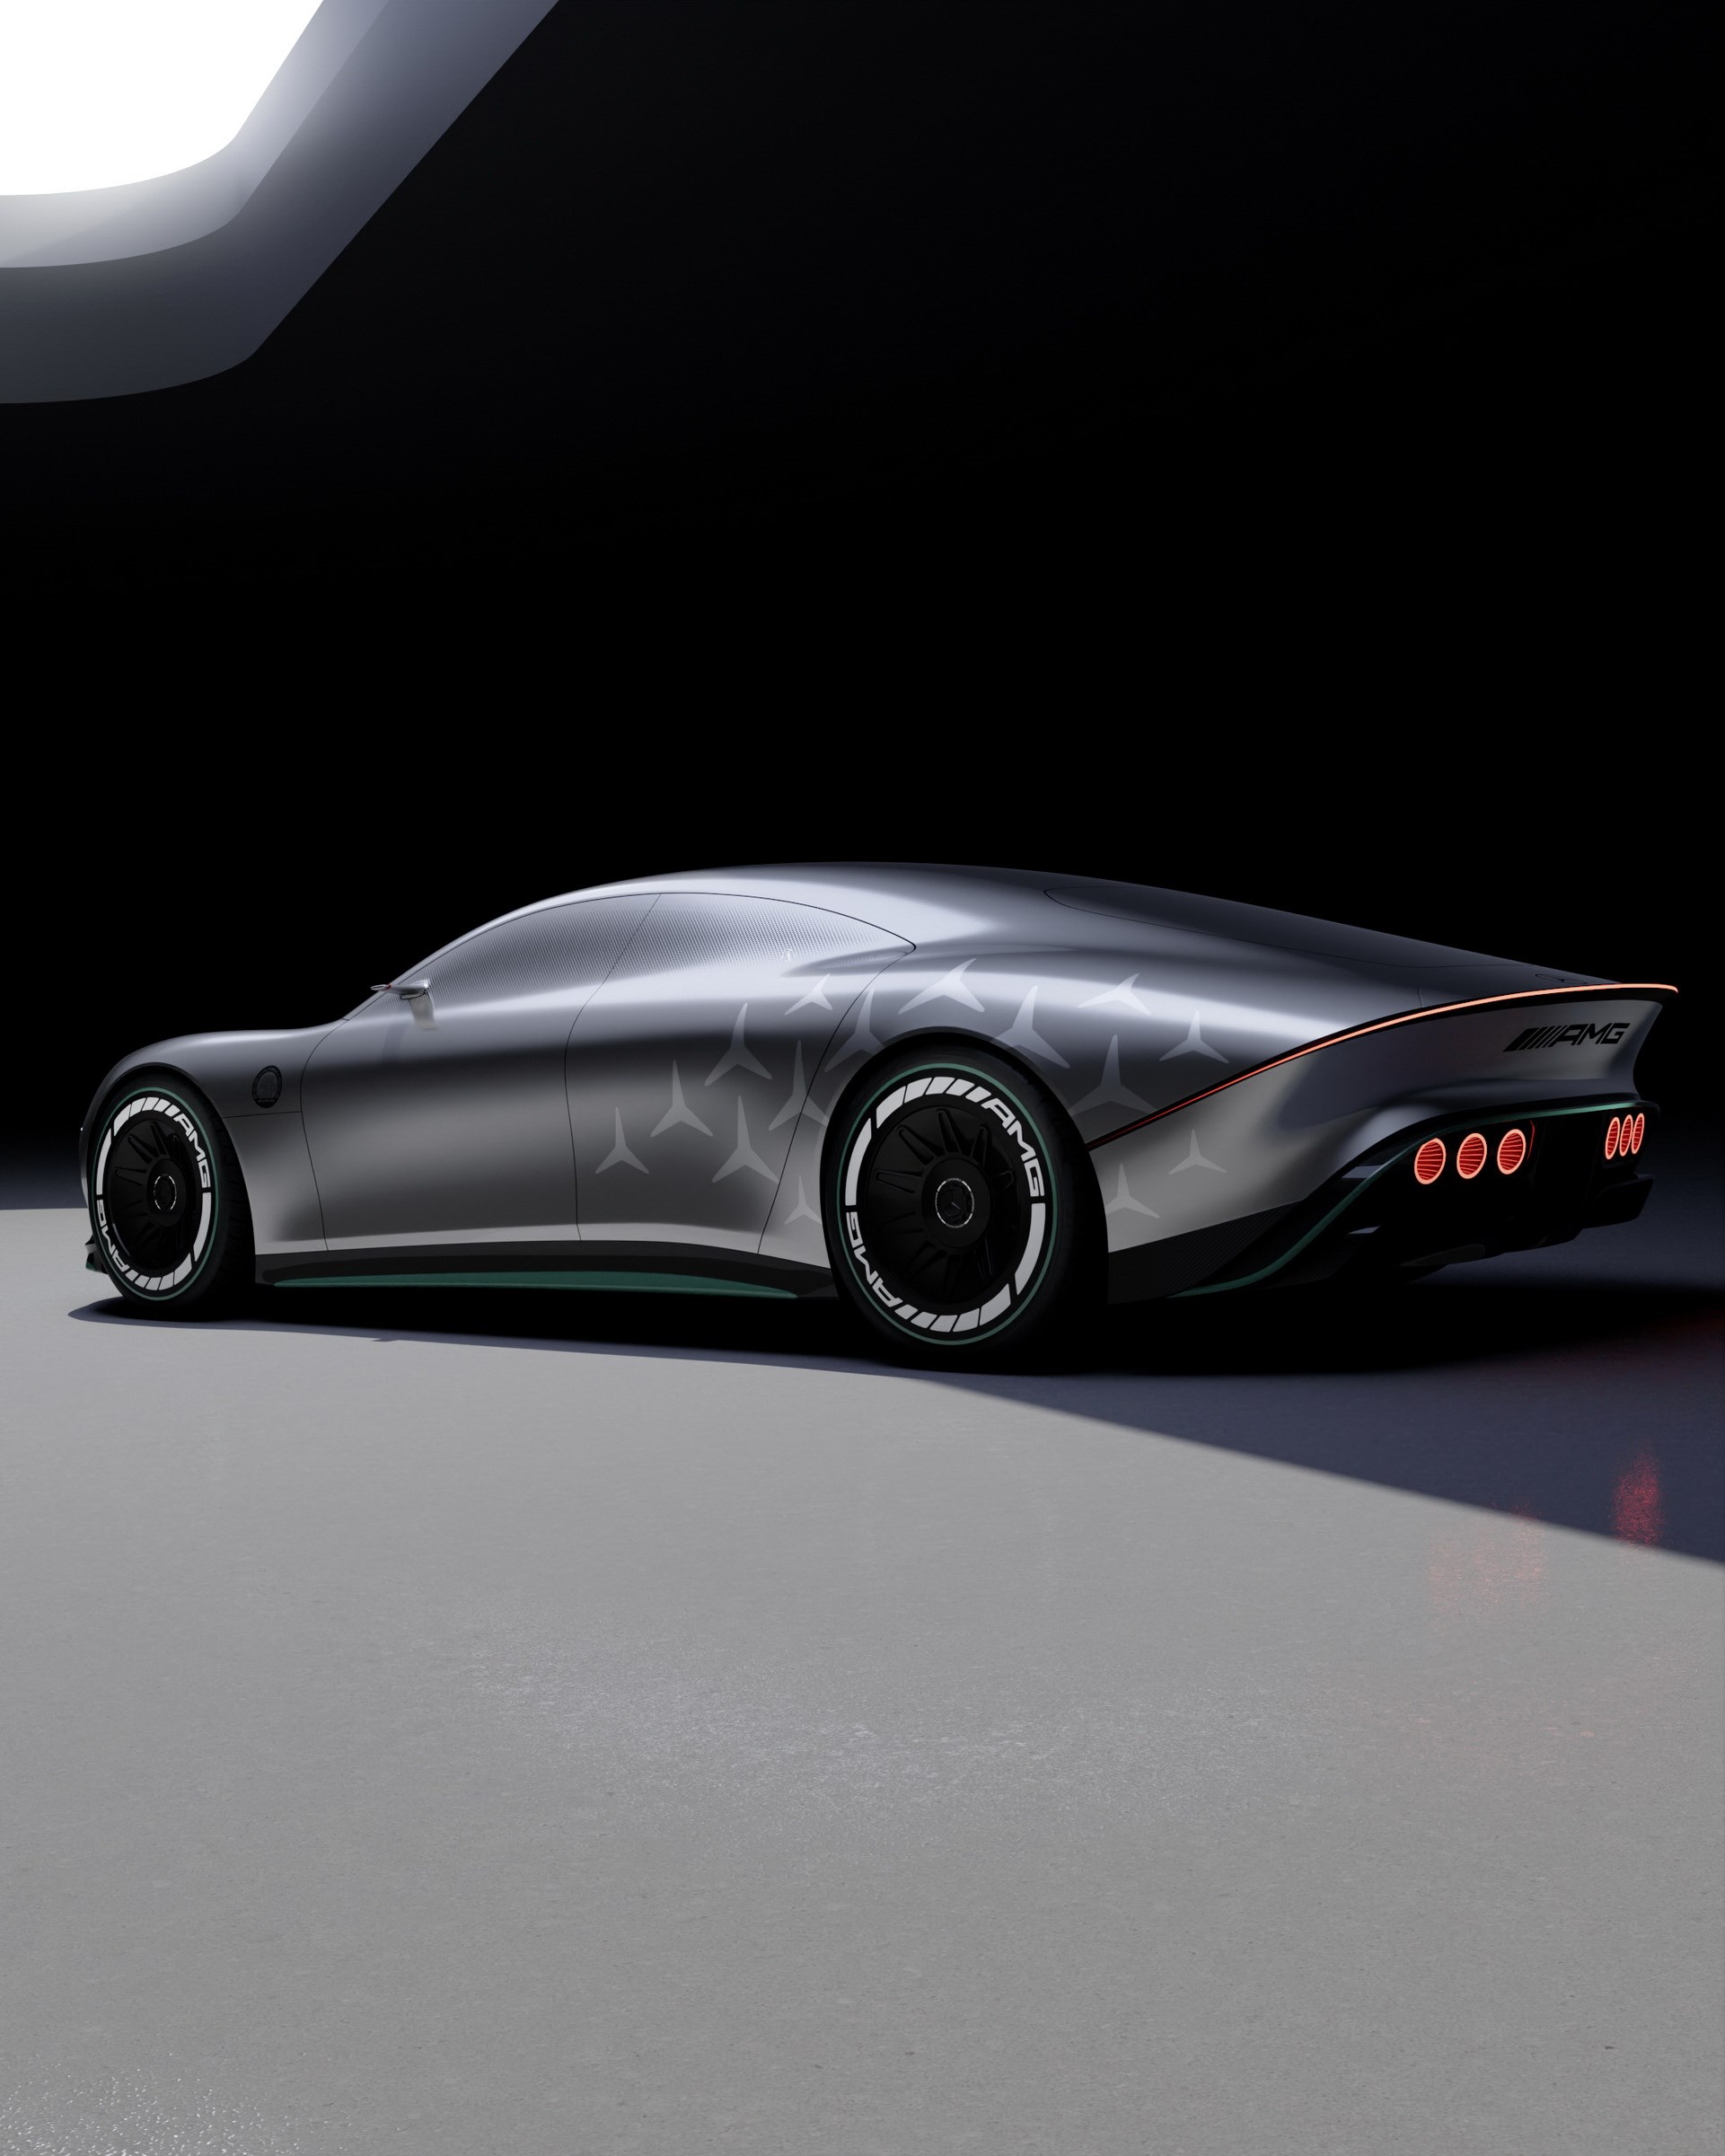 Mercedes'in elektrikli performans modeli tanıtıldı: Vision AMG